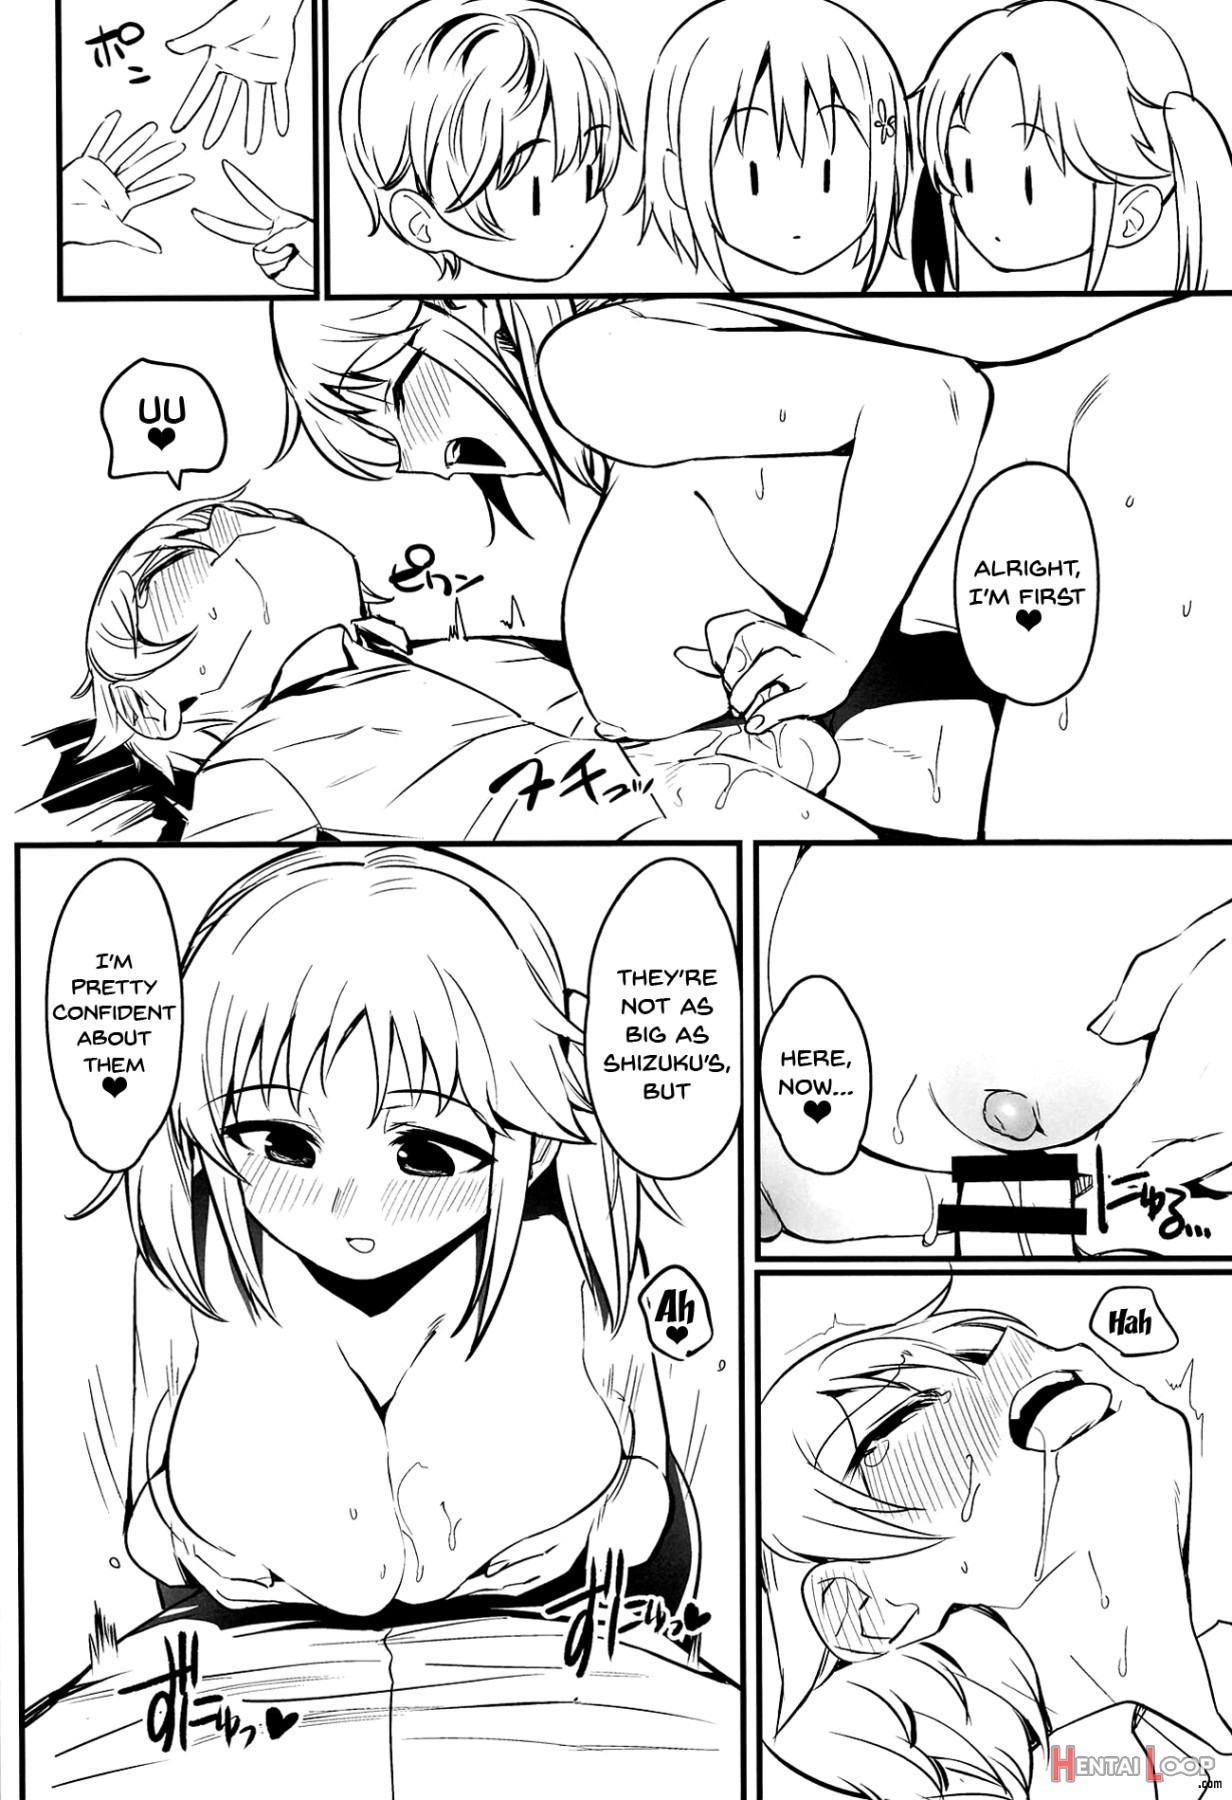 Morikubo Ecchi's Night page 11